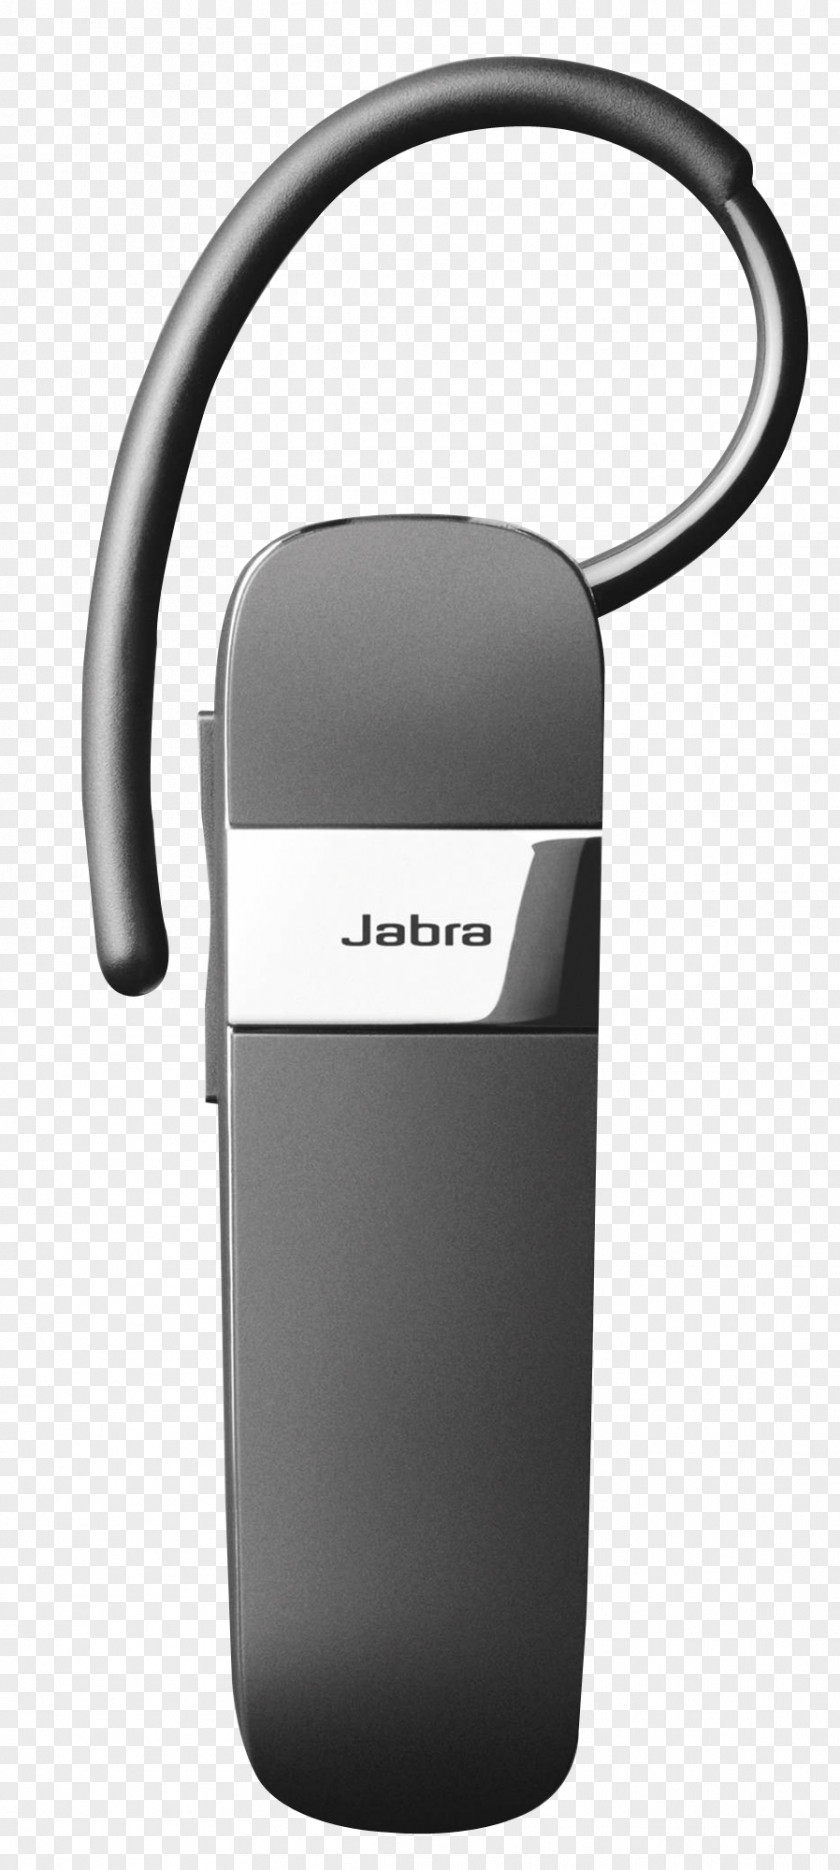 Bluetooth Headset Jabra Headphones Wireless PNG